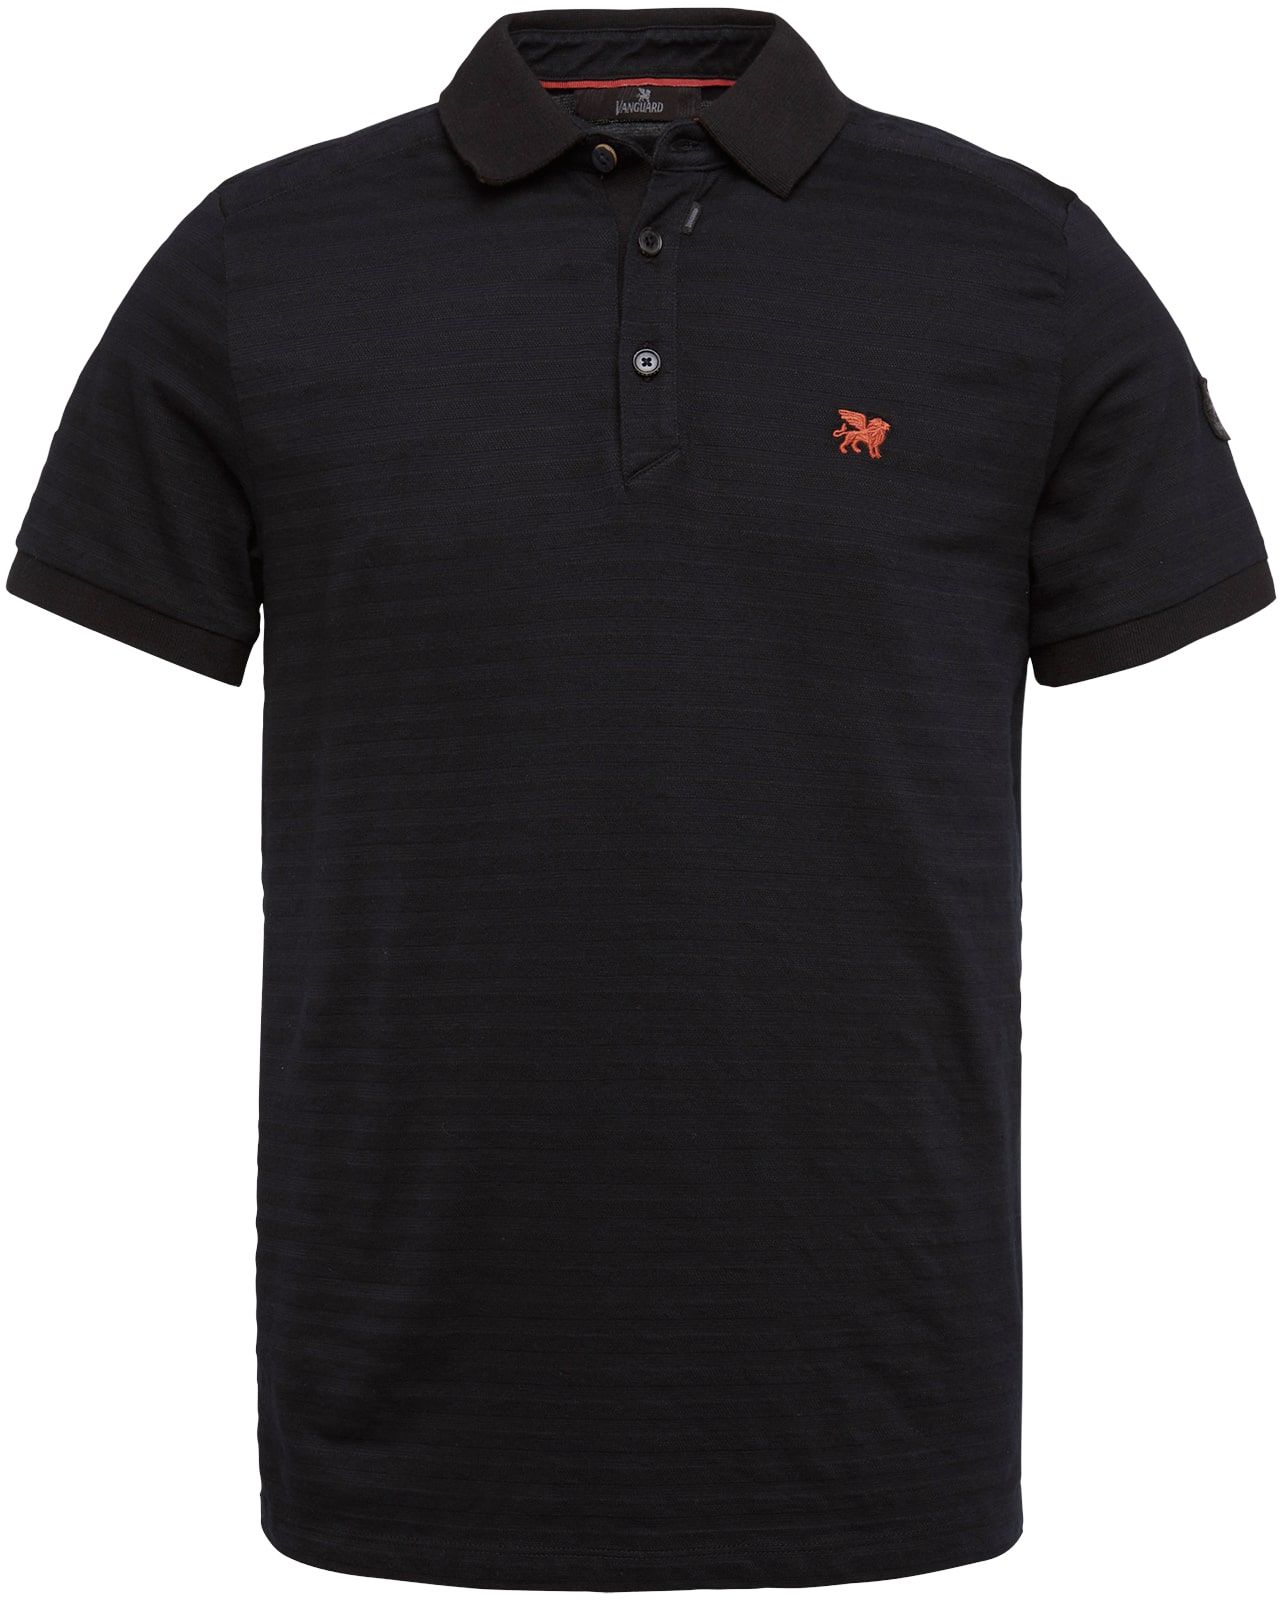 Vanguard Polo Shirt Jersey Black size 3XL